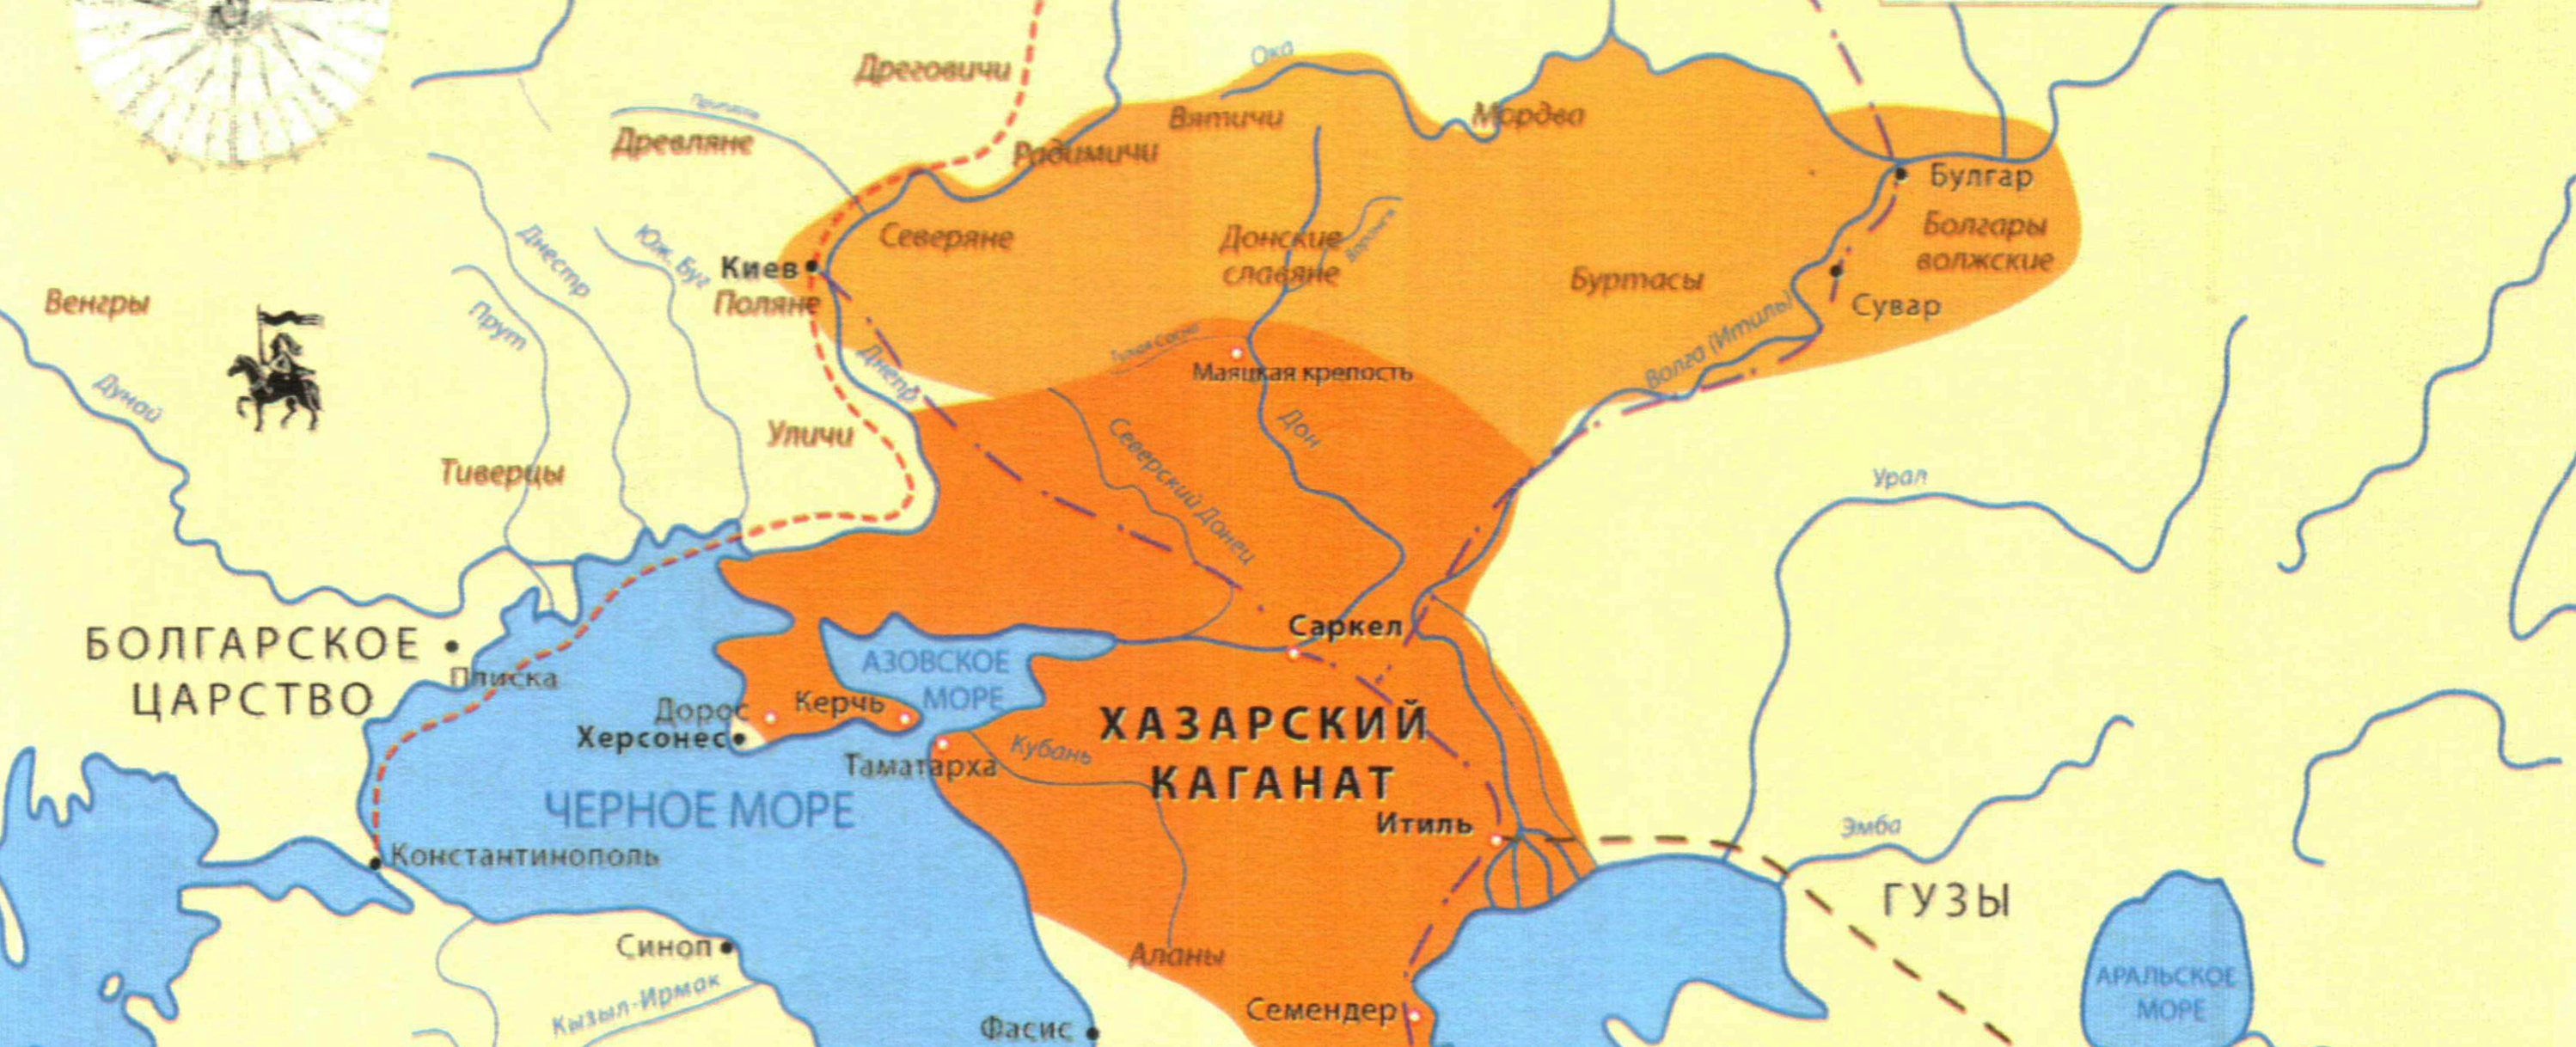 Хазарский каганат на карте древней Руси 10 век